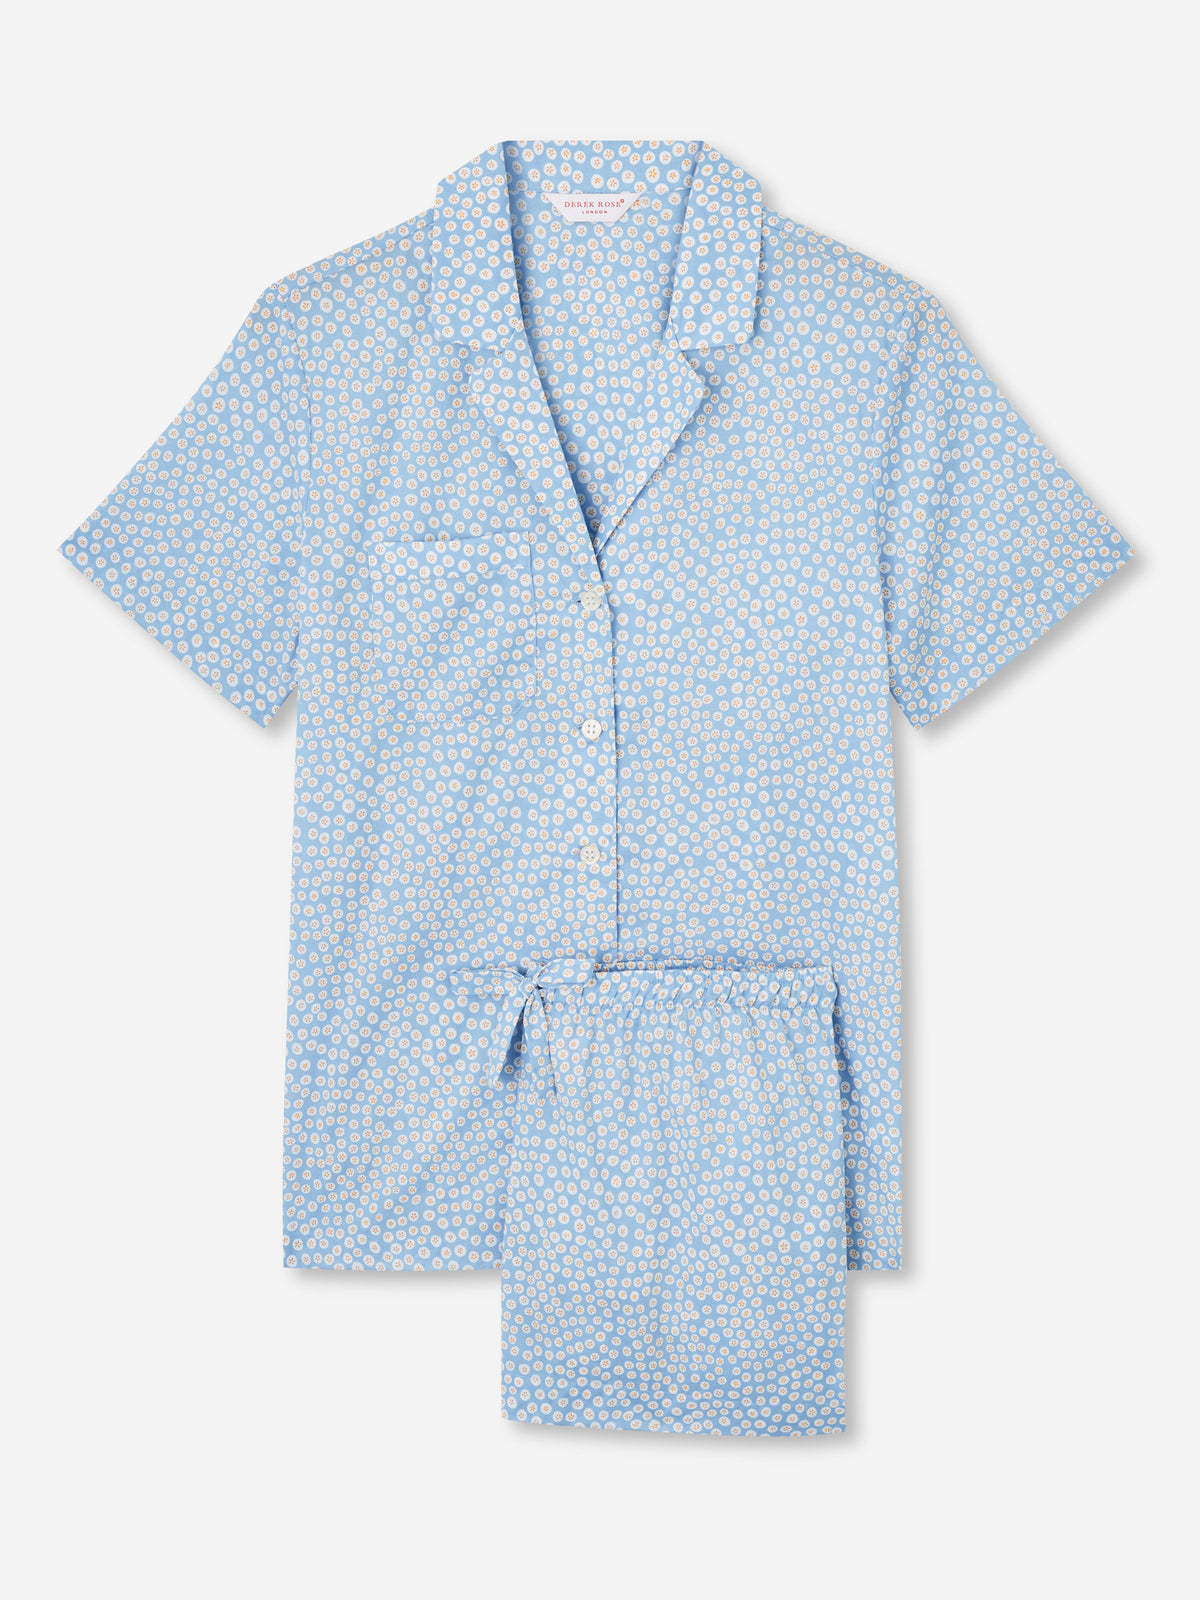 Women's Short Pyjamas Nelson 88 Cotton Batiste Blue